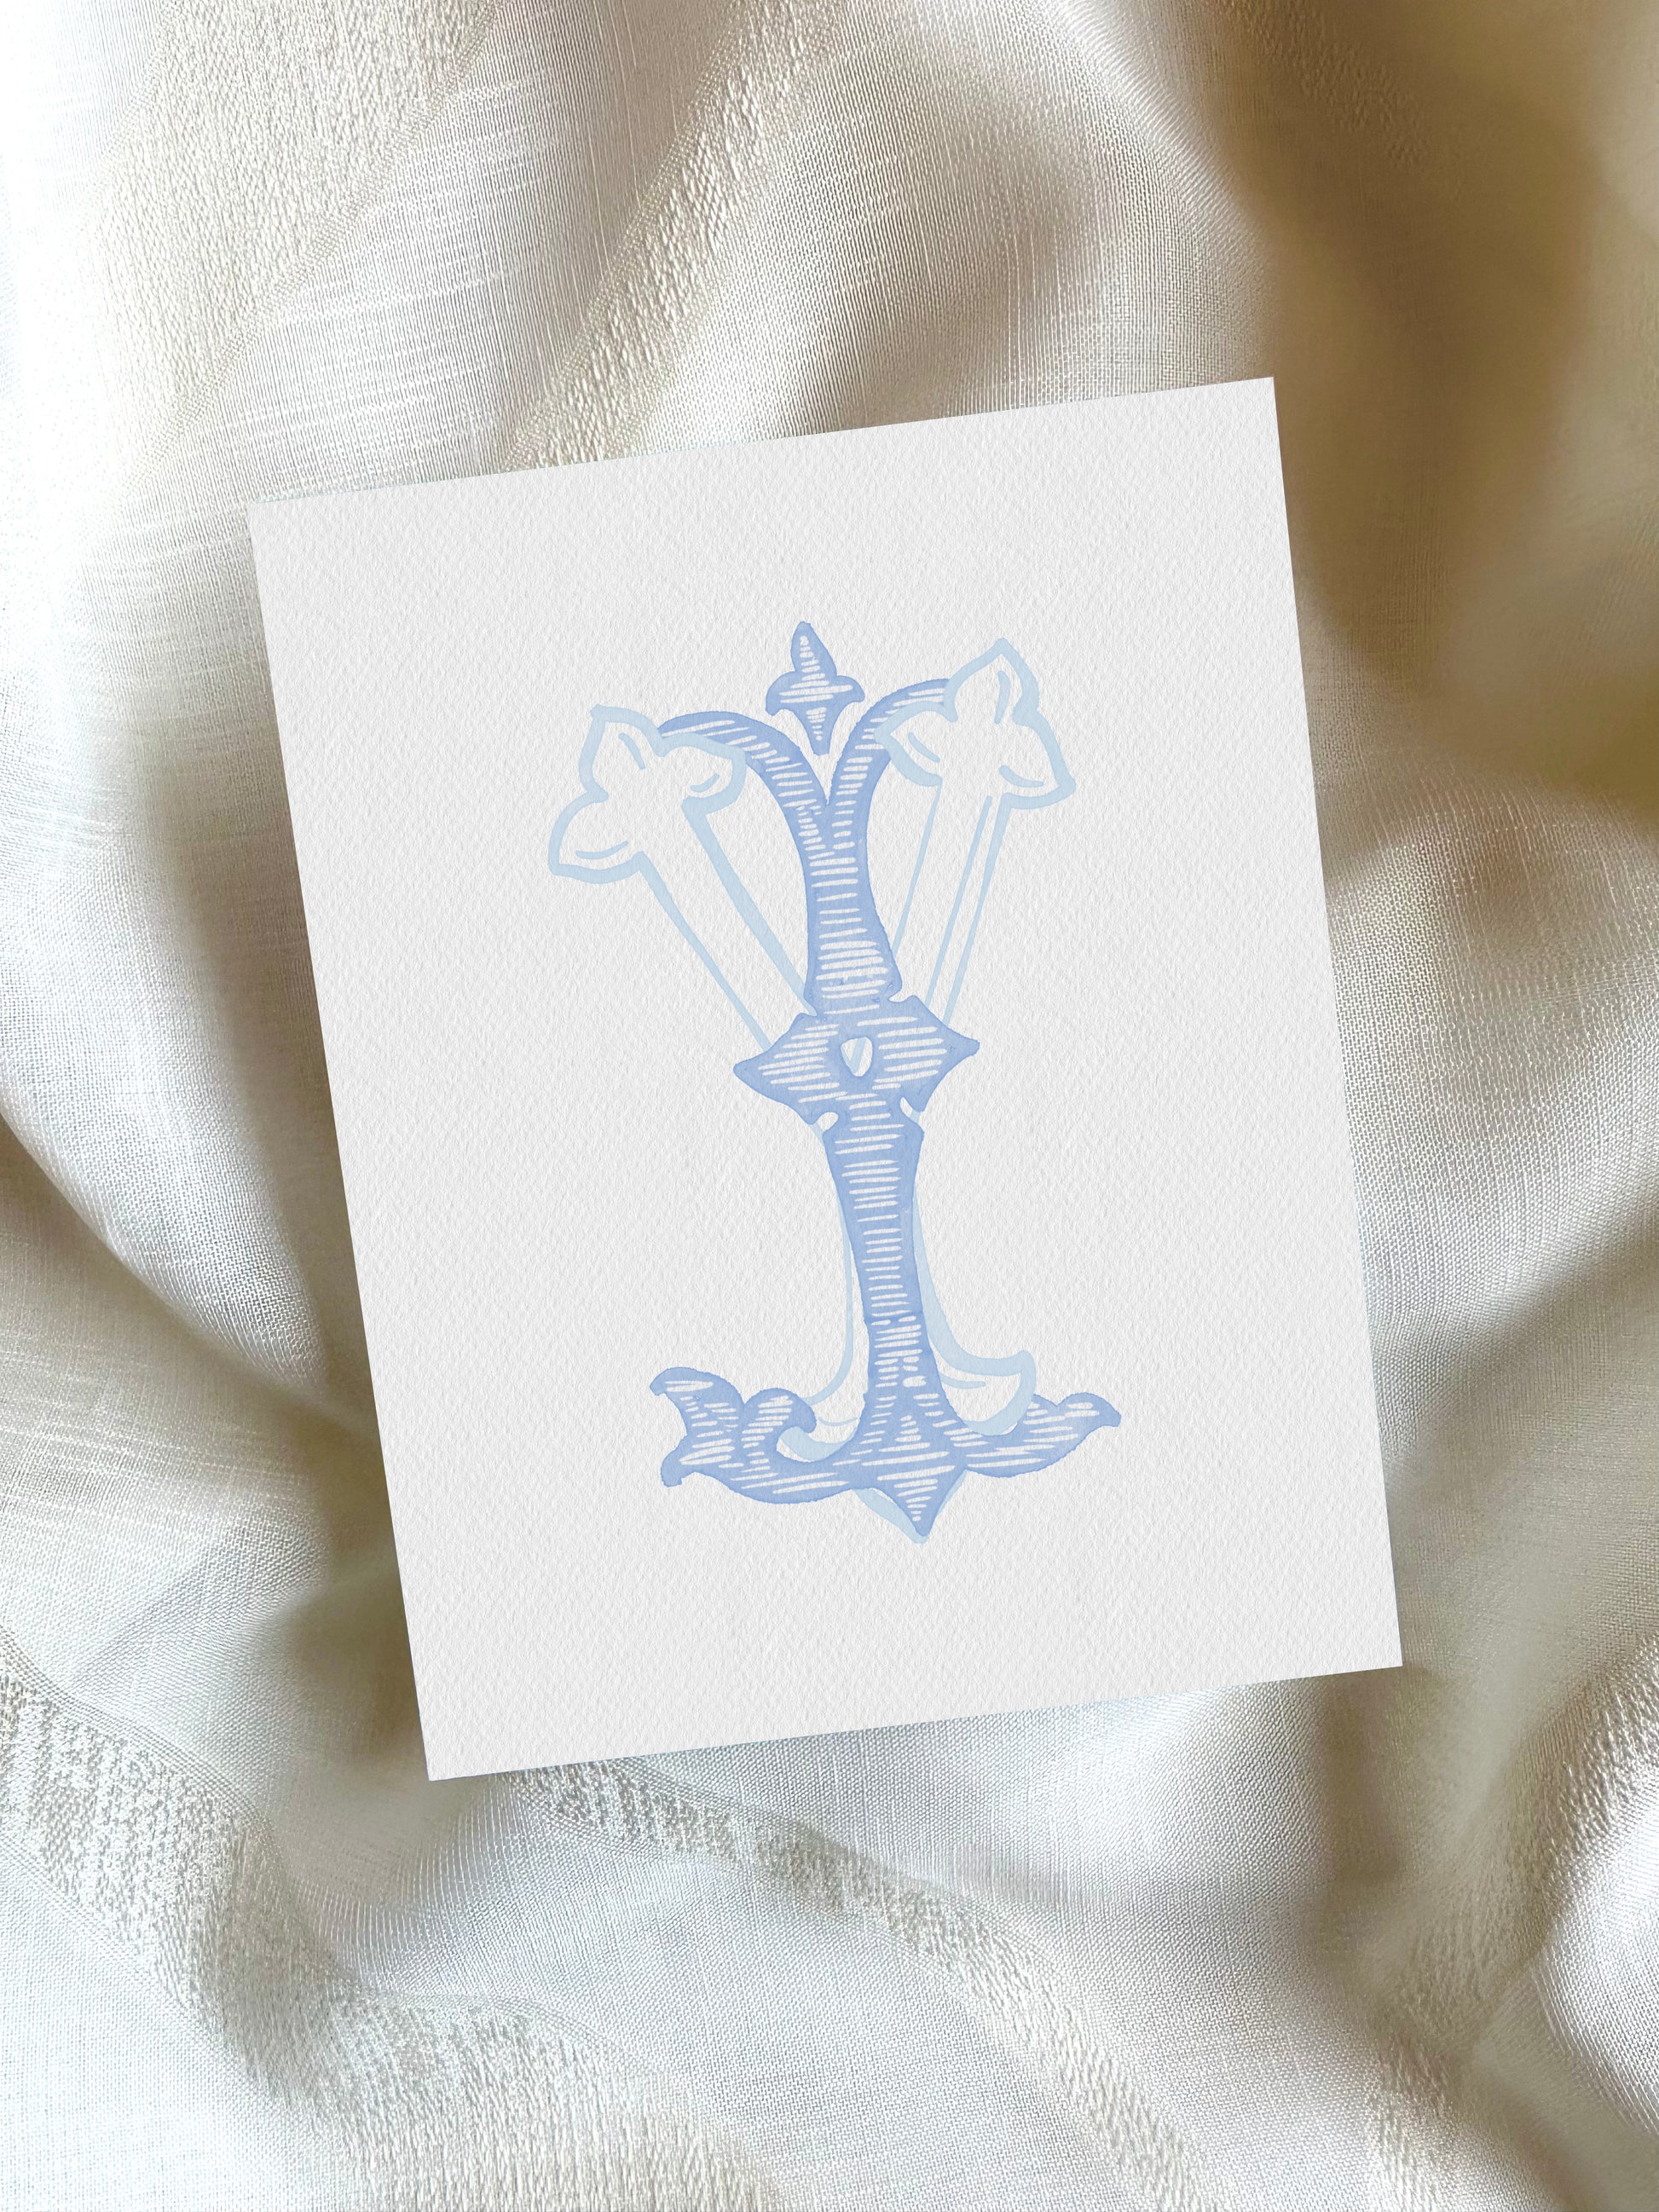 2 Letter Monogram with Letters JY YJ | Digital Download - Wedding Monogram SVG, Personal Logo, Wedding Logo for Wedding Invitations The Wedding Crest Lab